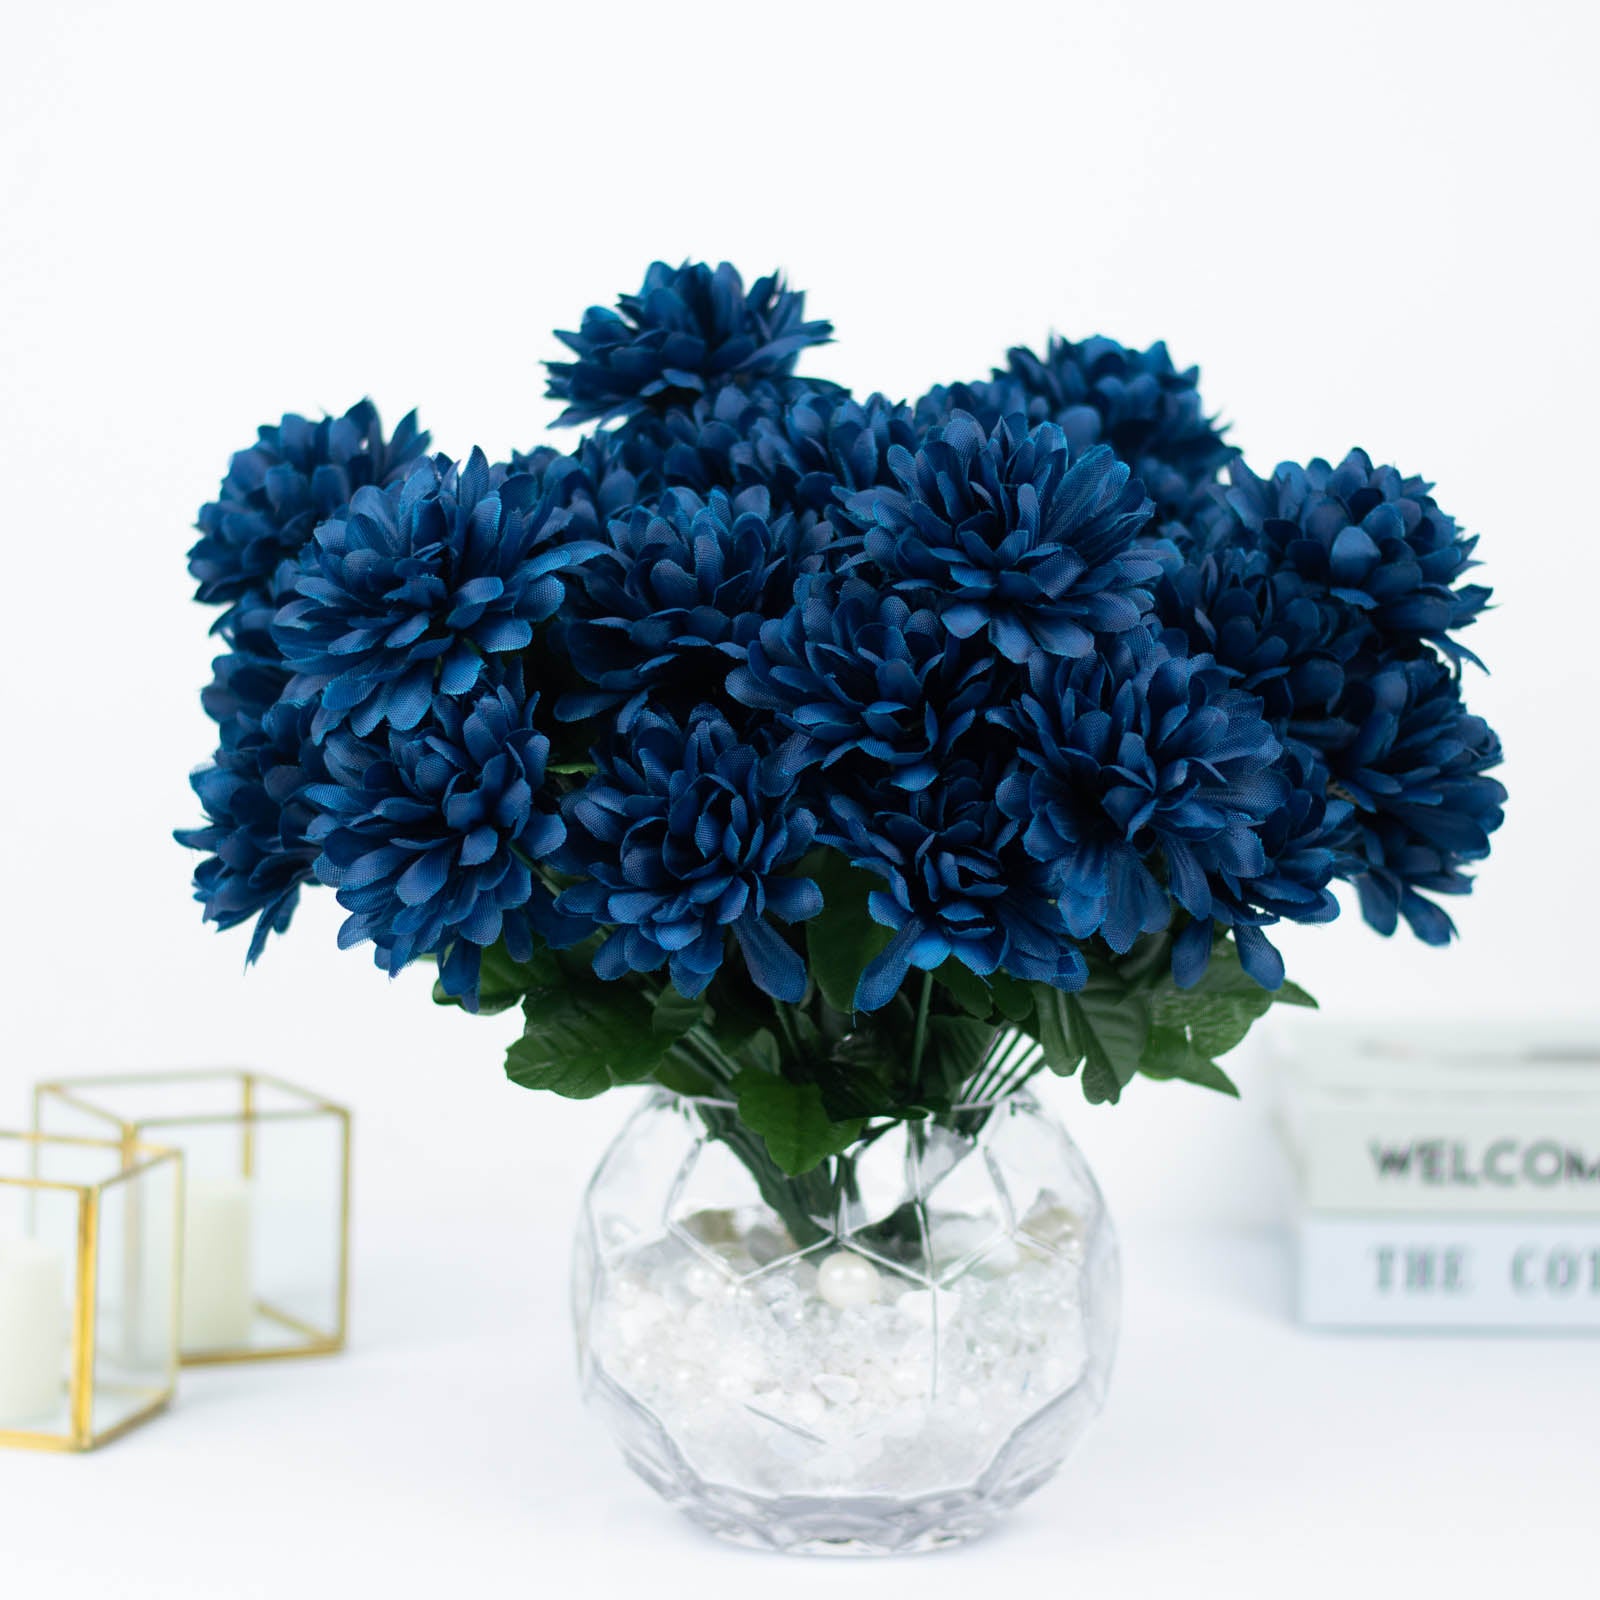 12 Bush 84 Pcs Navy Blue Artificial Silk Chrysanthemum Flowers Tableclothsfactory